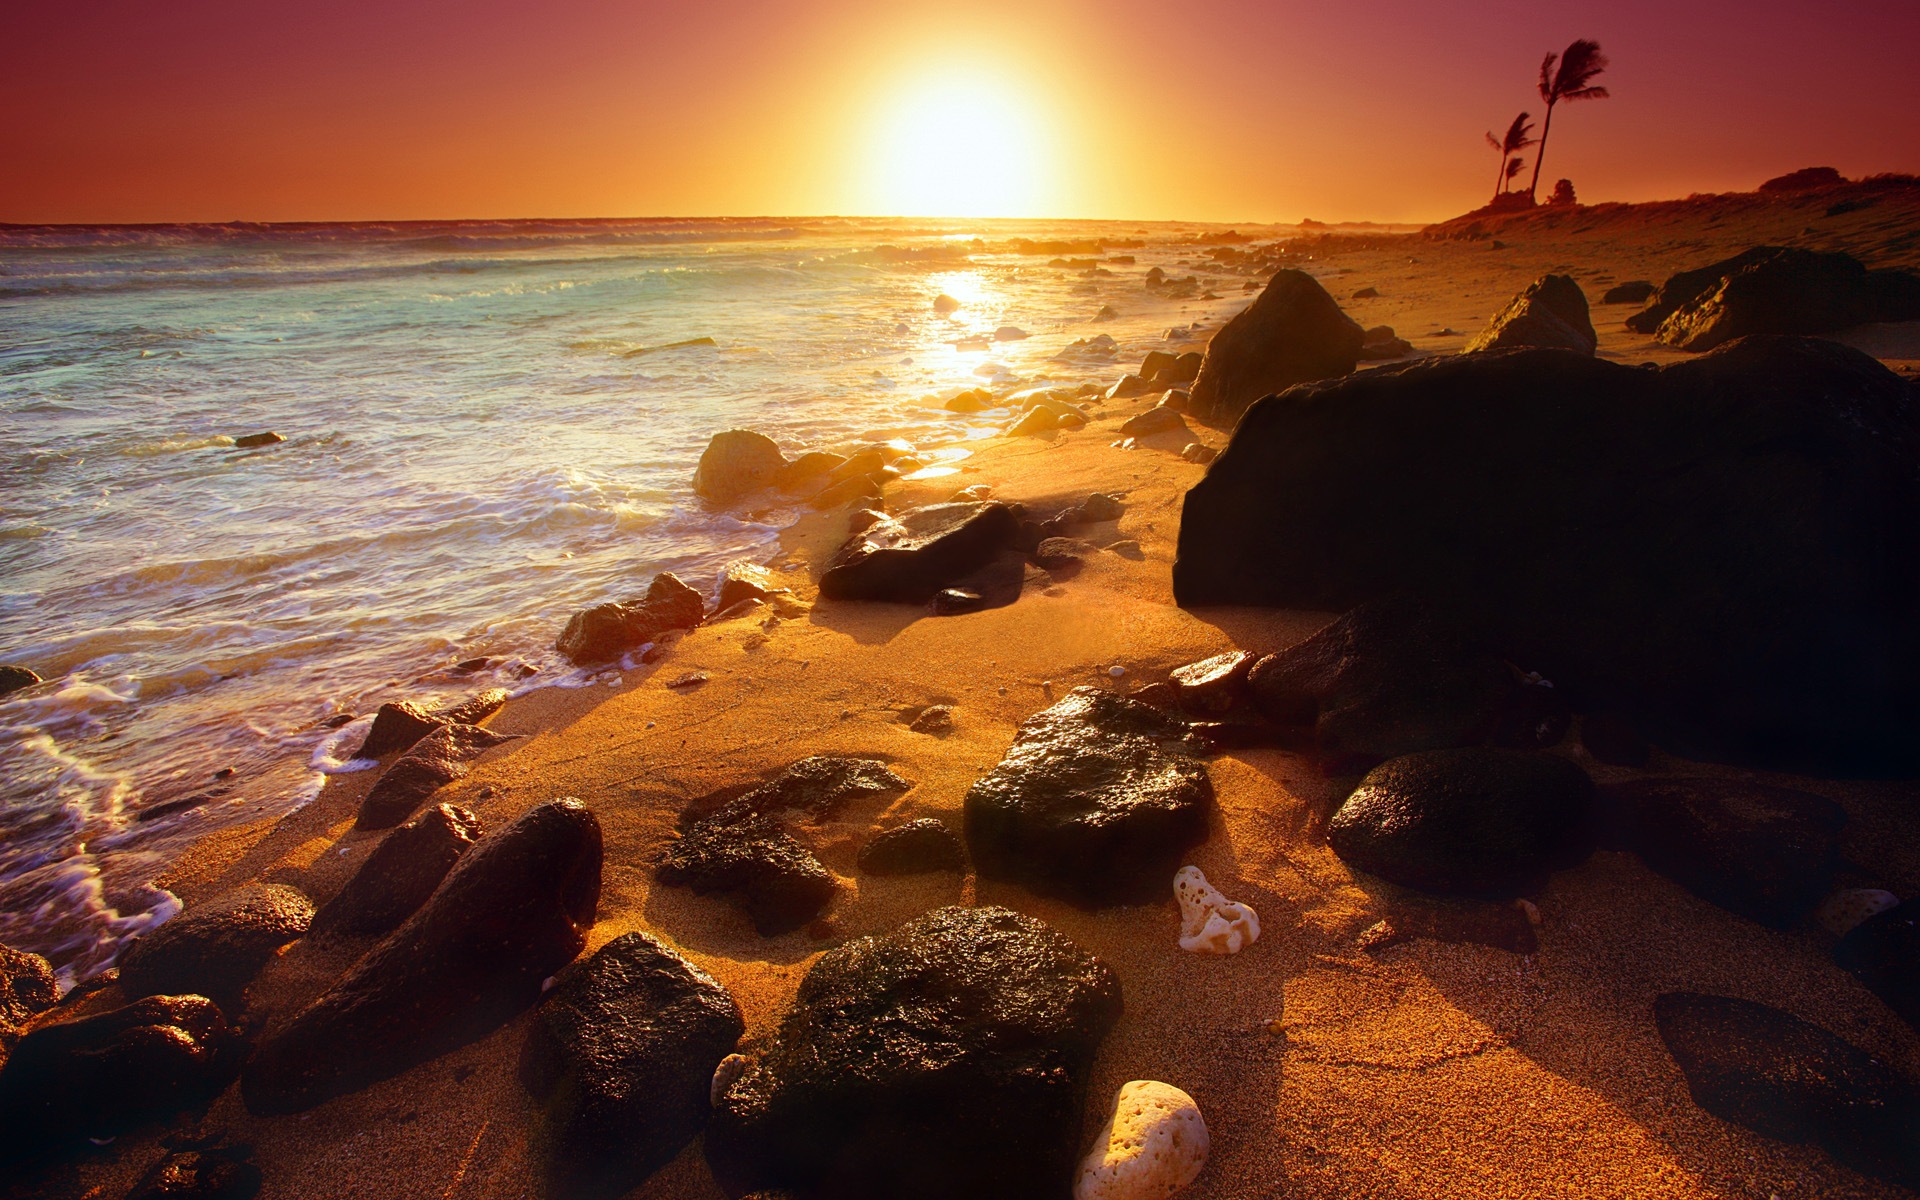 Windows 8 theme wallpaper: Beach sunrise and sunset views #1 - 1920x1200